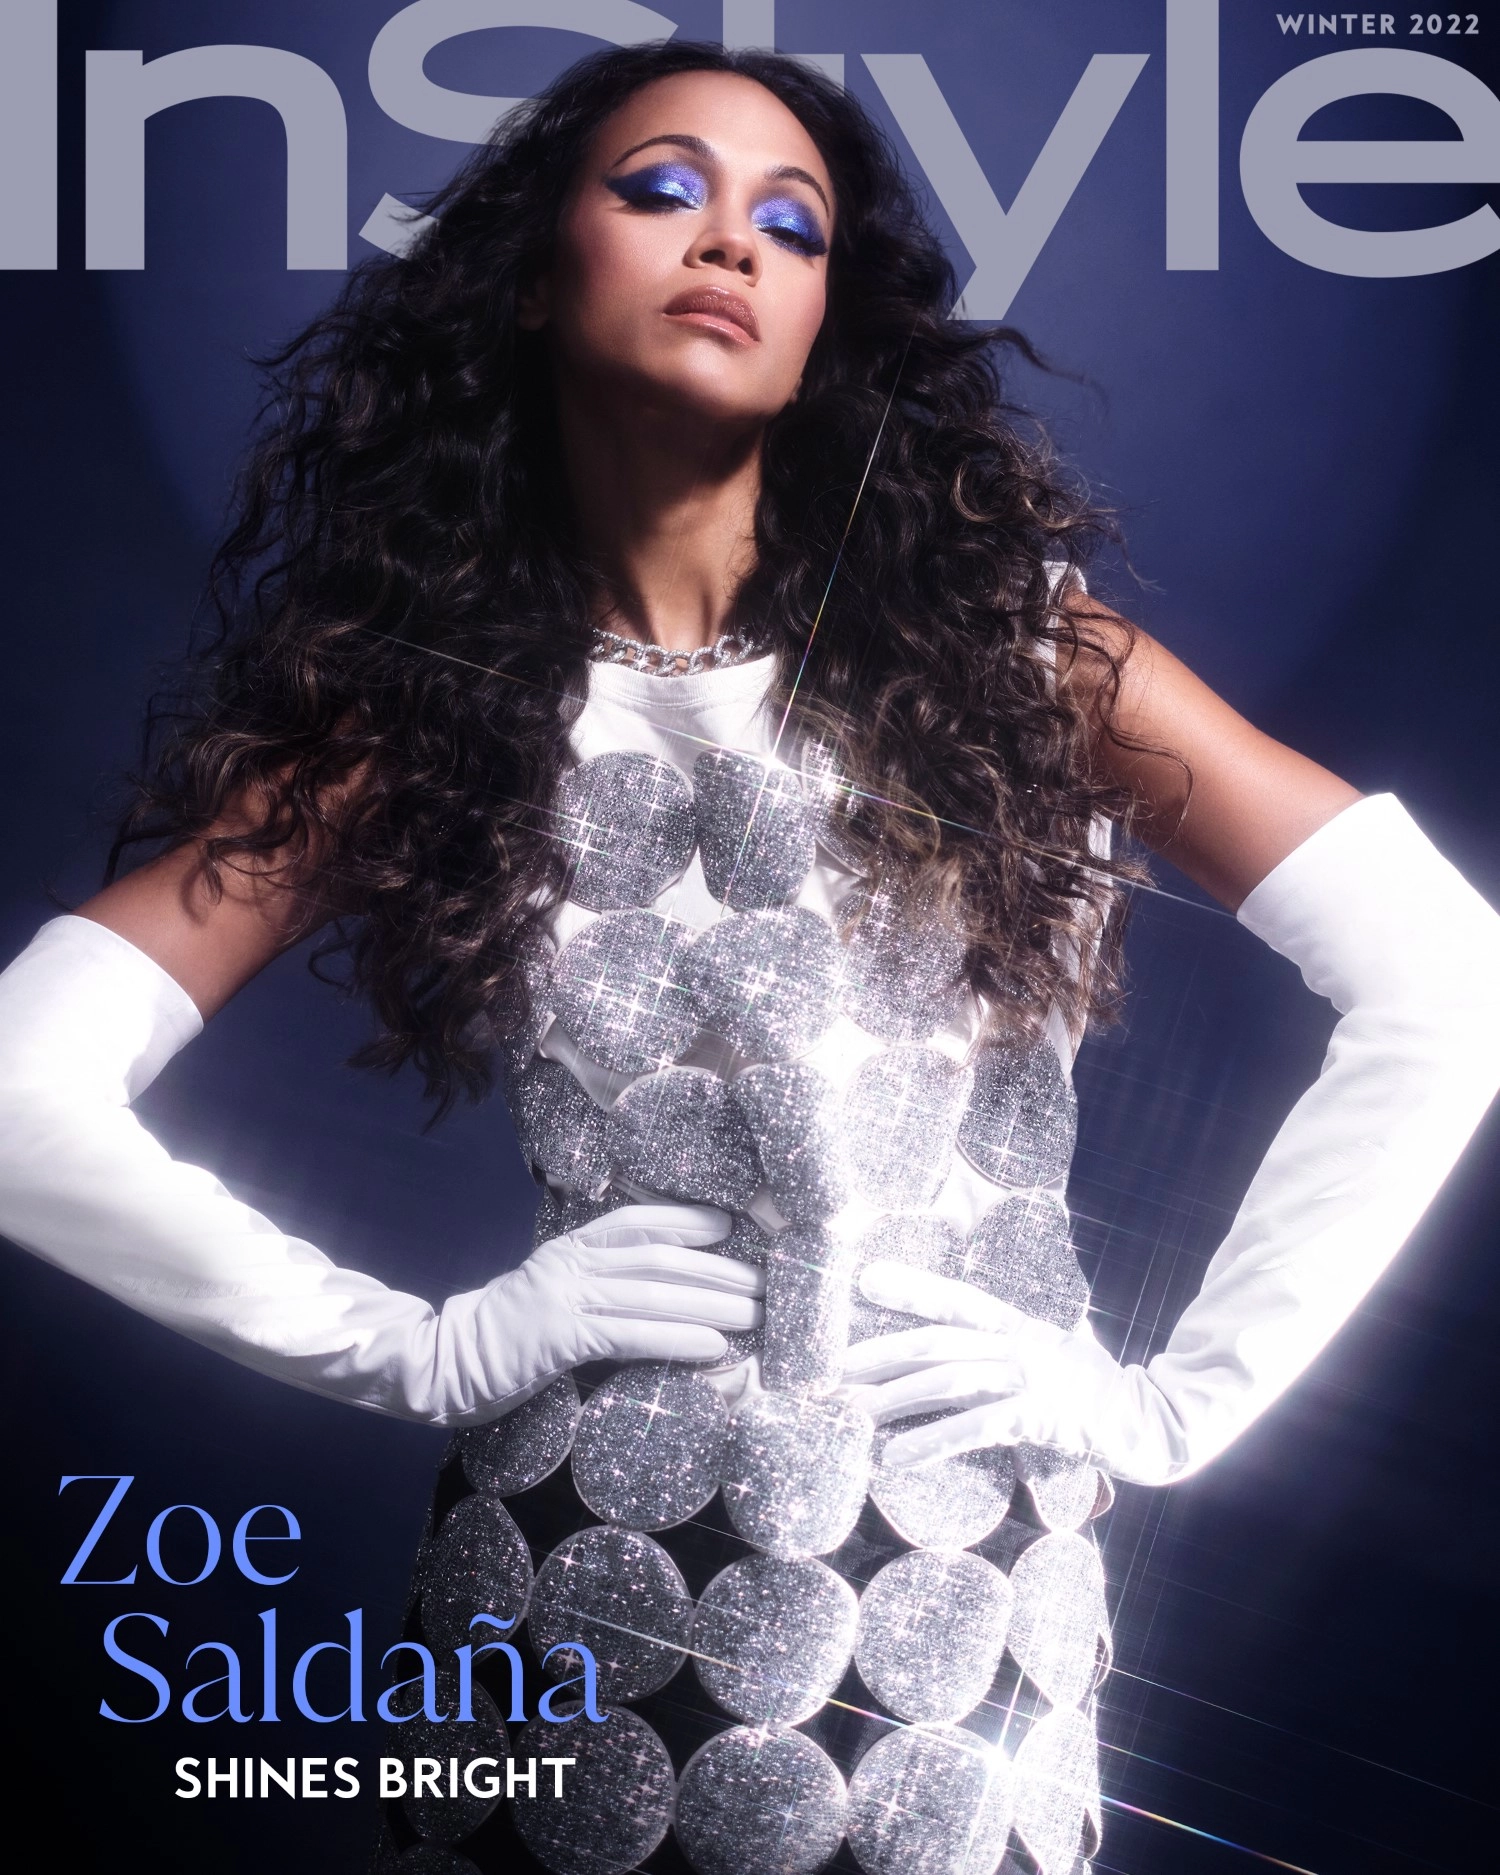 Zoe Saldana covers InStyle US Winter 2022 by JD Barnes